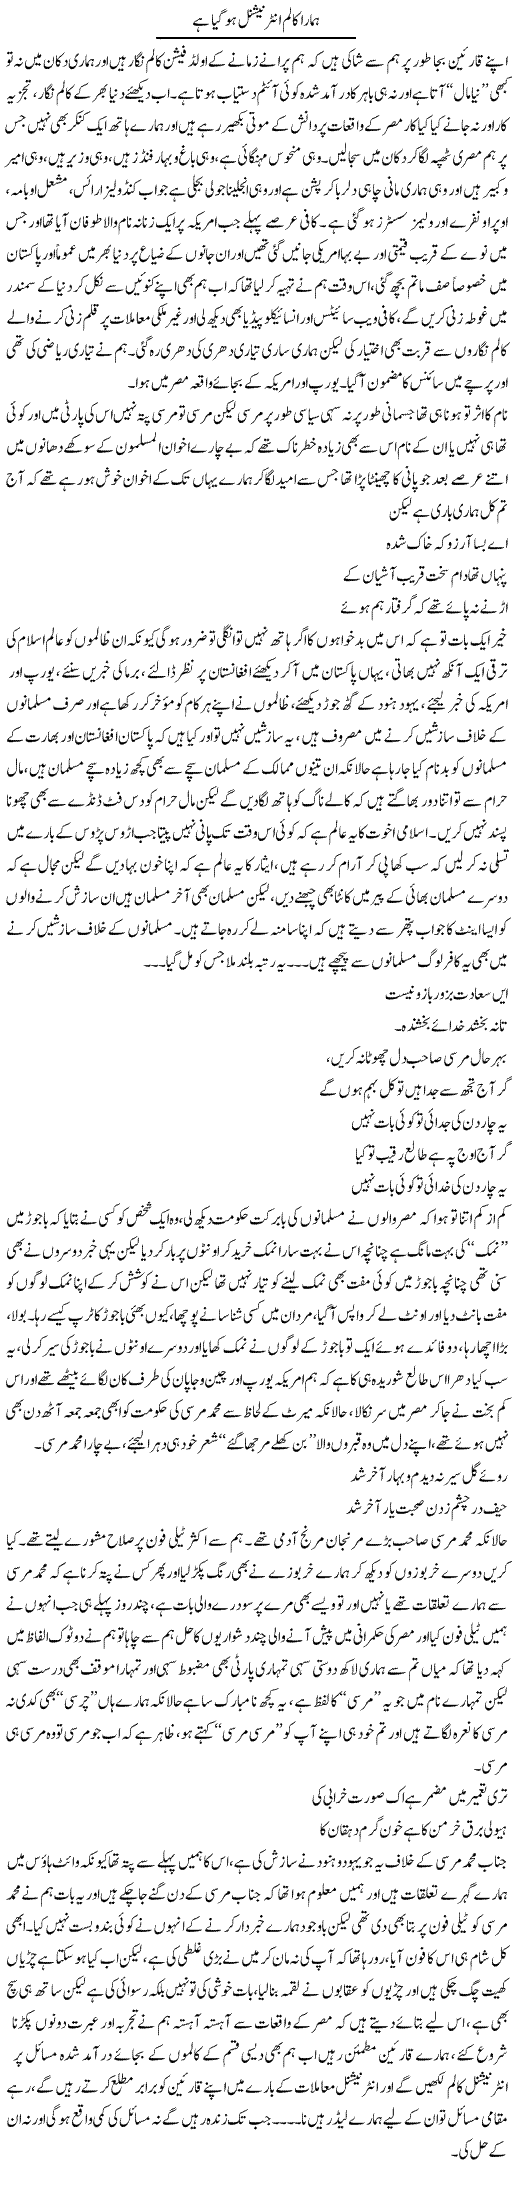 Hamara Column International Ho Gaya | Saad Ullah Jan Barq | Daily Urdu Columns